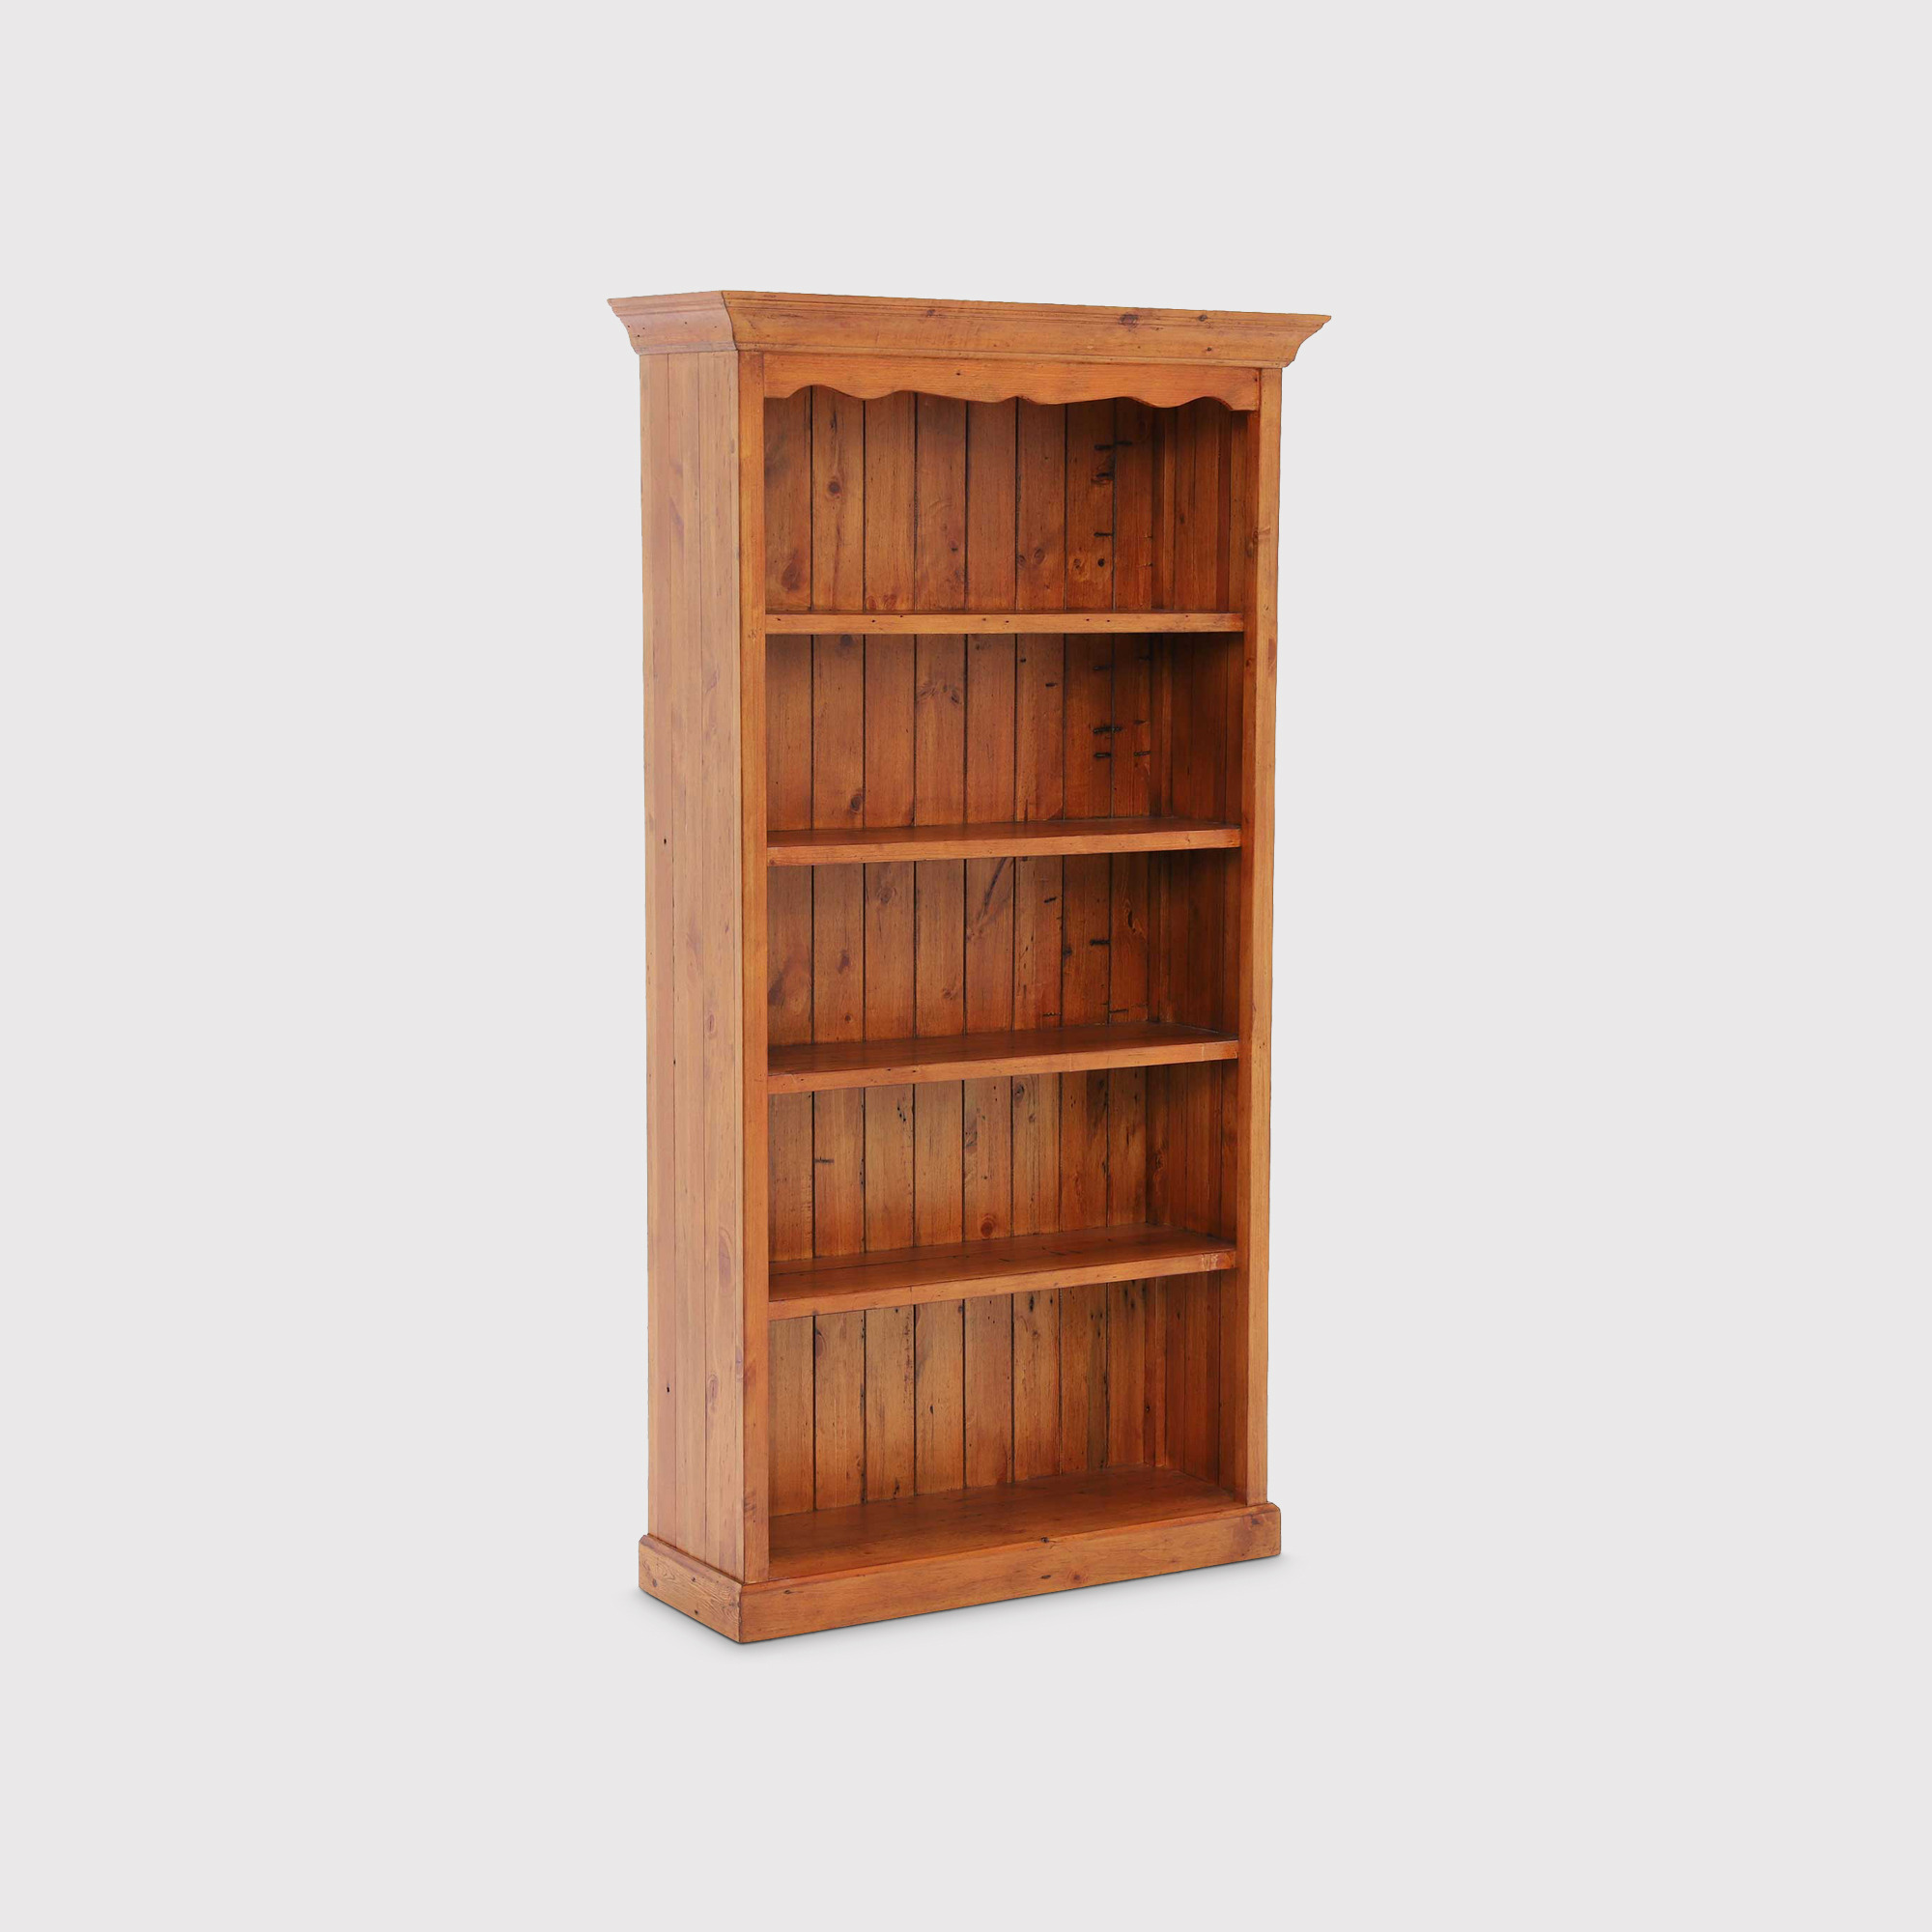 Villiers Medium 5 Shelf Bookcase, Pine Wood - Barker & Stonehouse - image 1